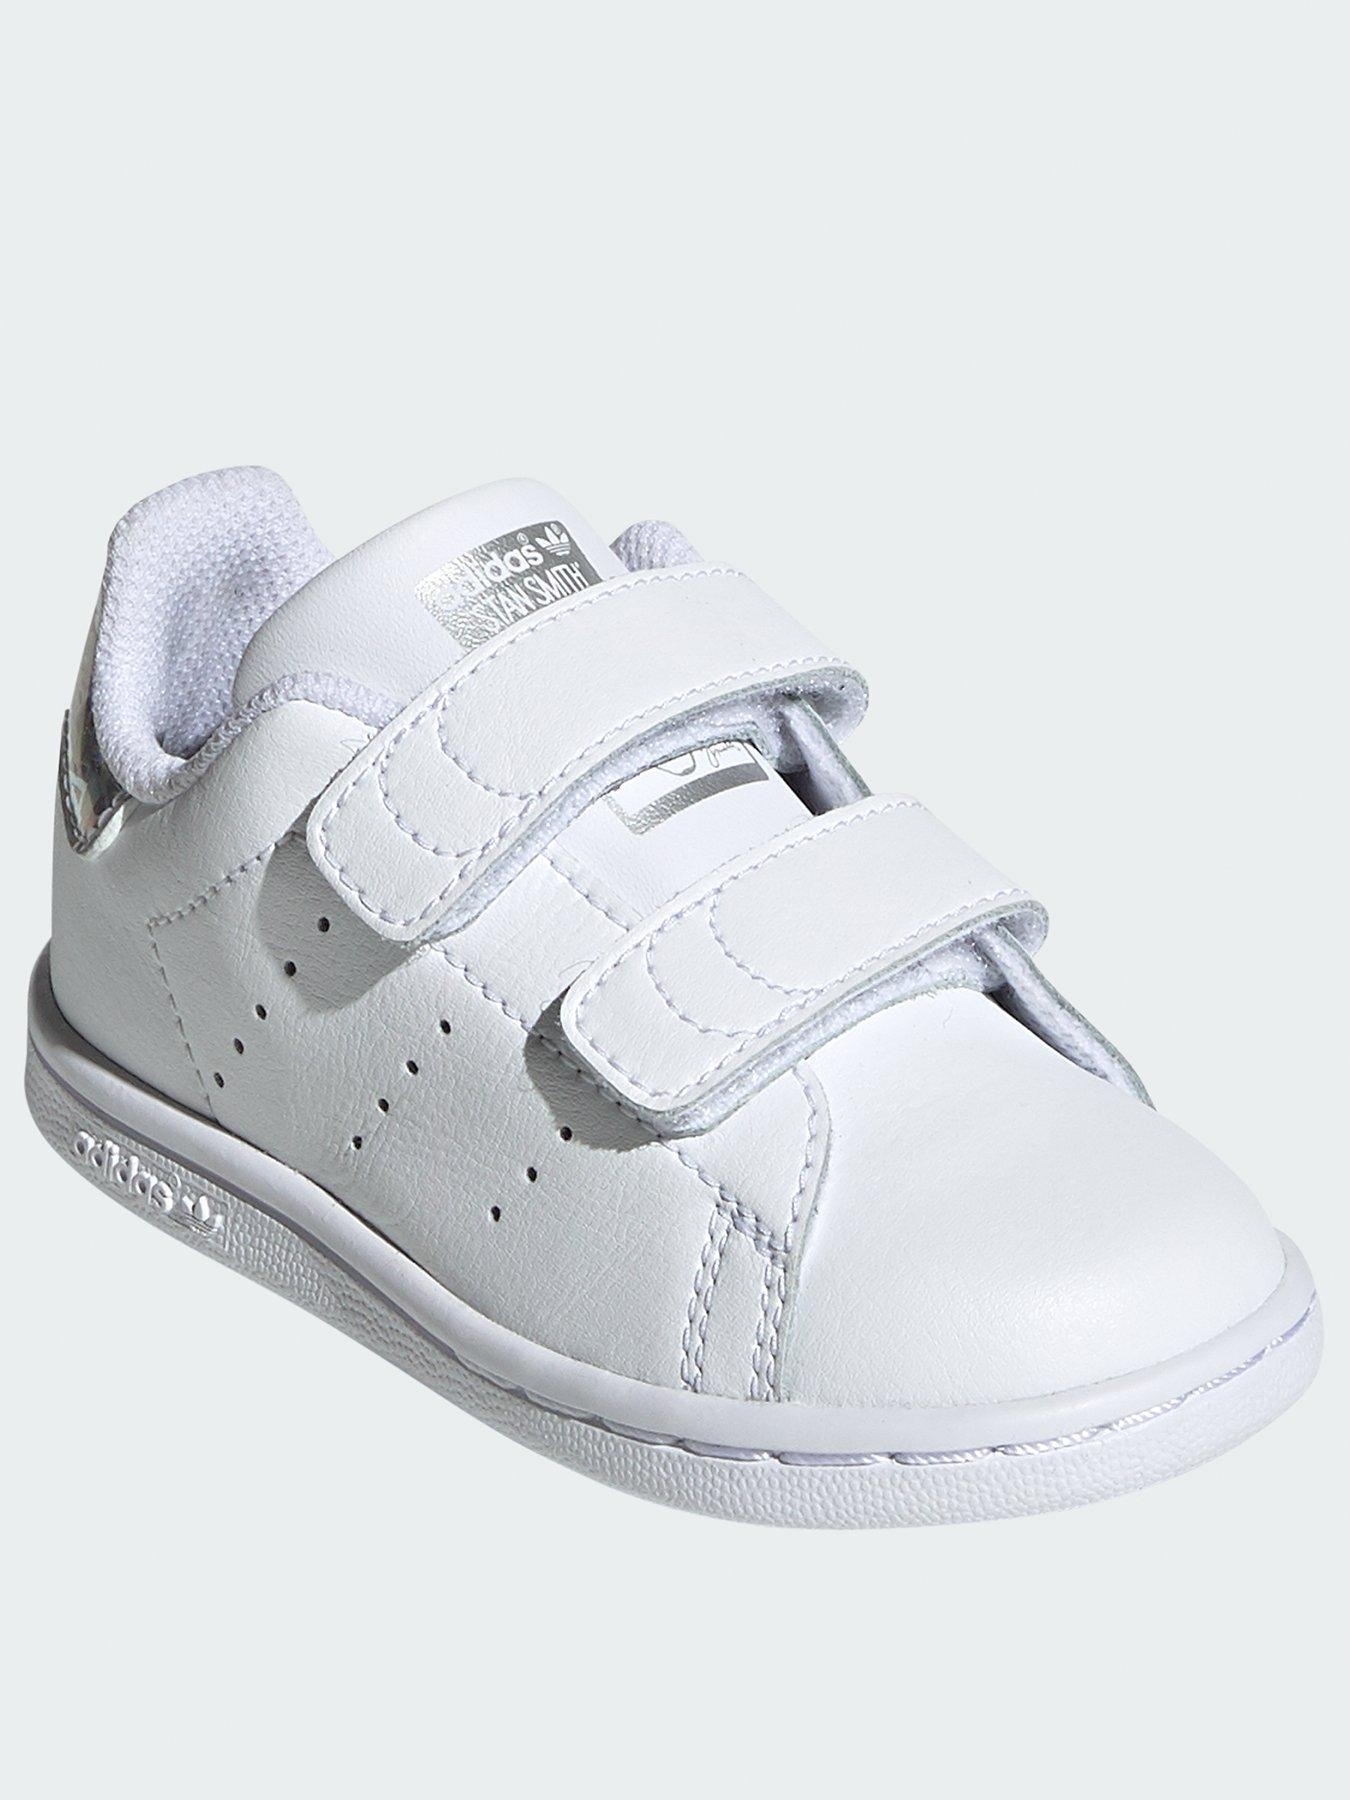 adidas baby trainers uk